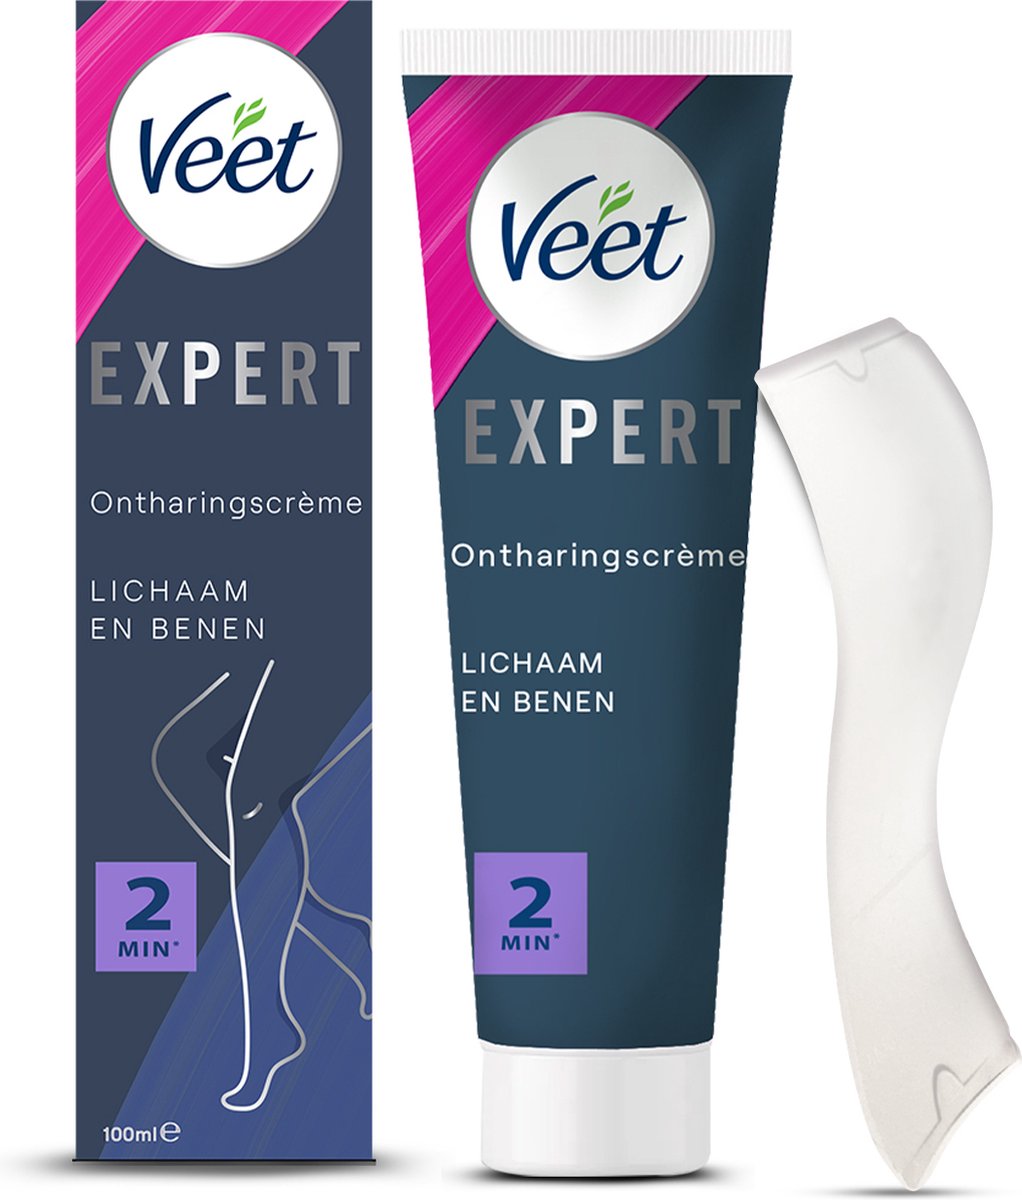 Veet Expert Ontharingscreme met sheaboter - Lichaam & benen - Alle  huidtypes - 100ml -... | bol